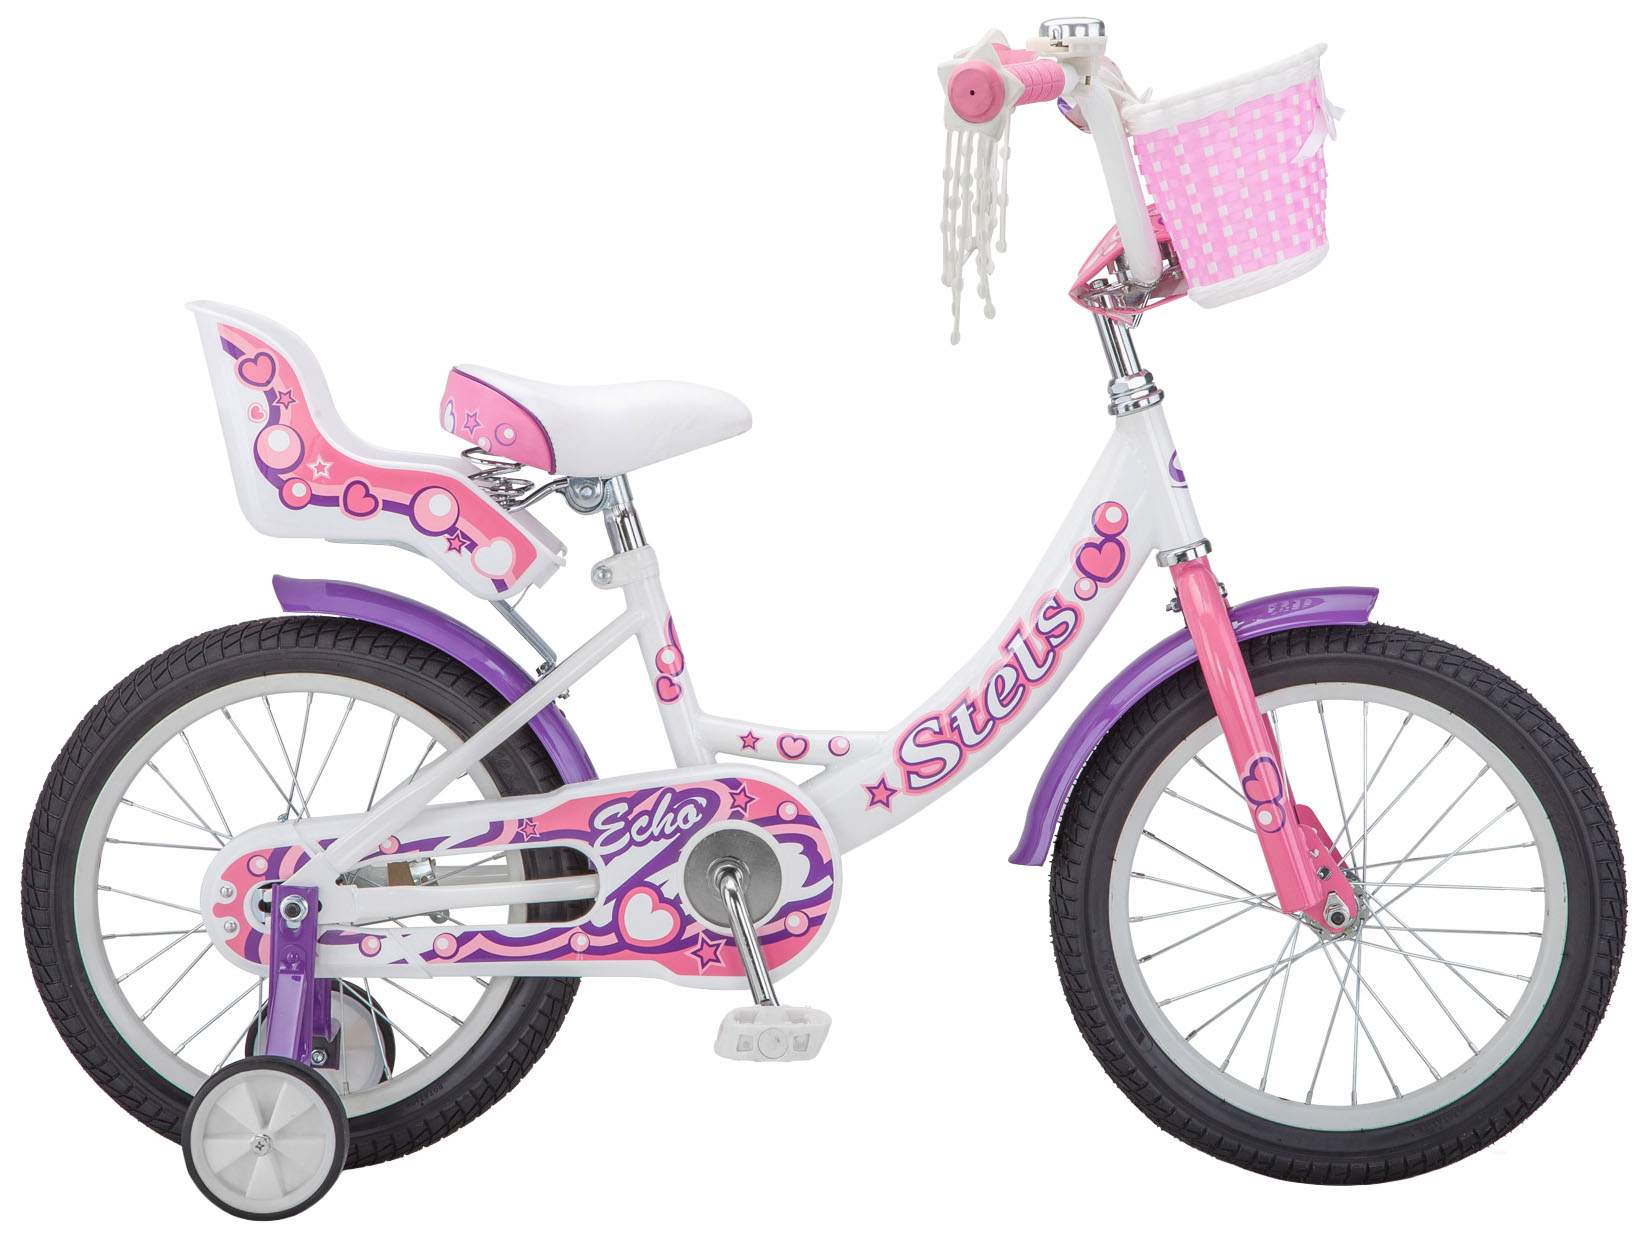 Купить велосипед STELS Echo 16 (V020) белый/розовый, цены на Мегамаркет | Артикул: 100024118543